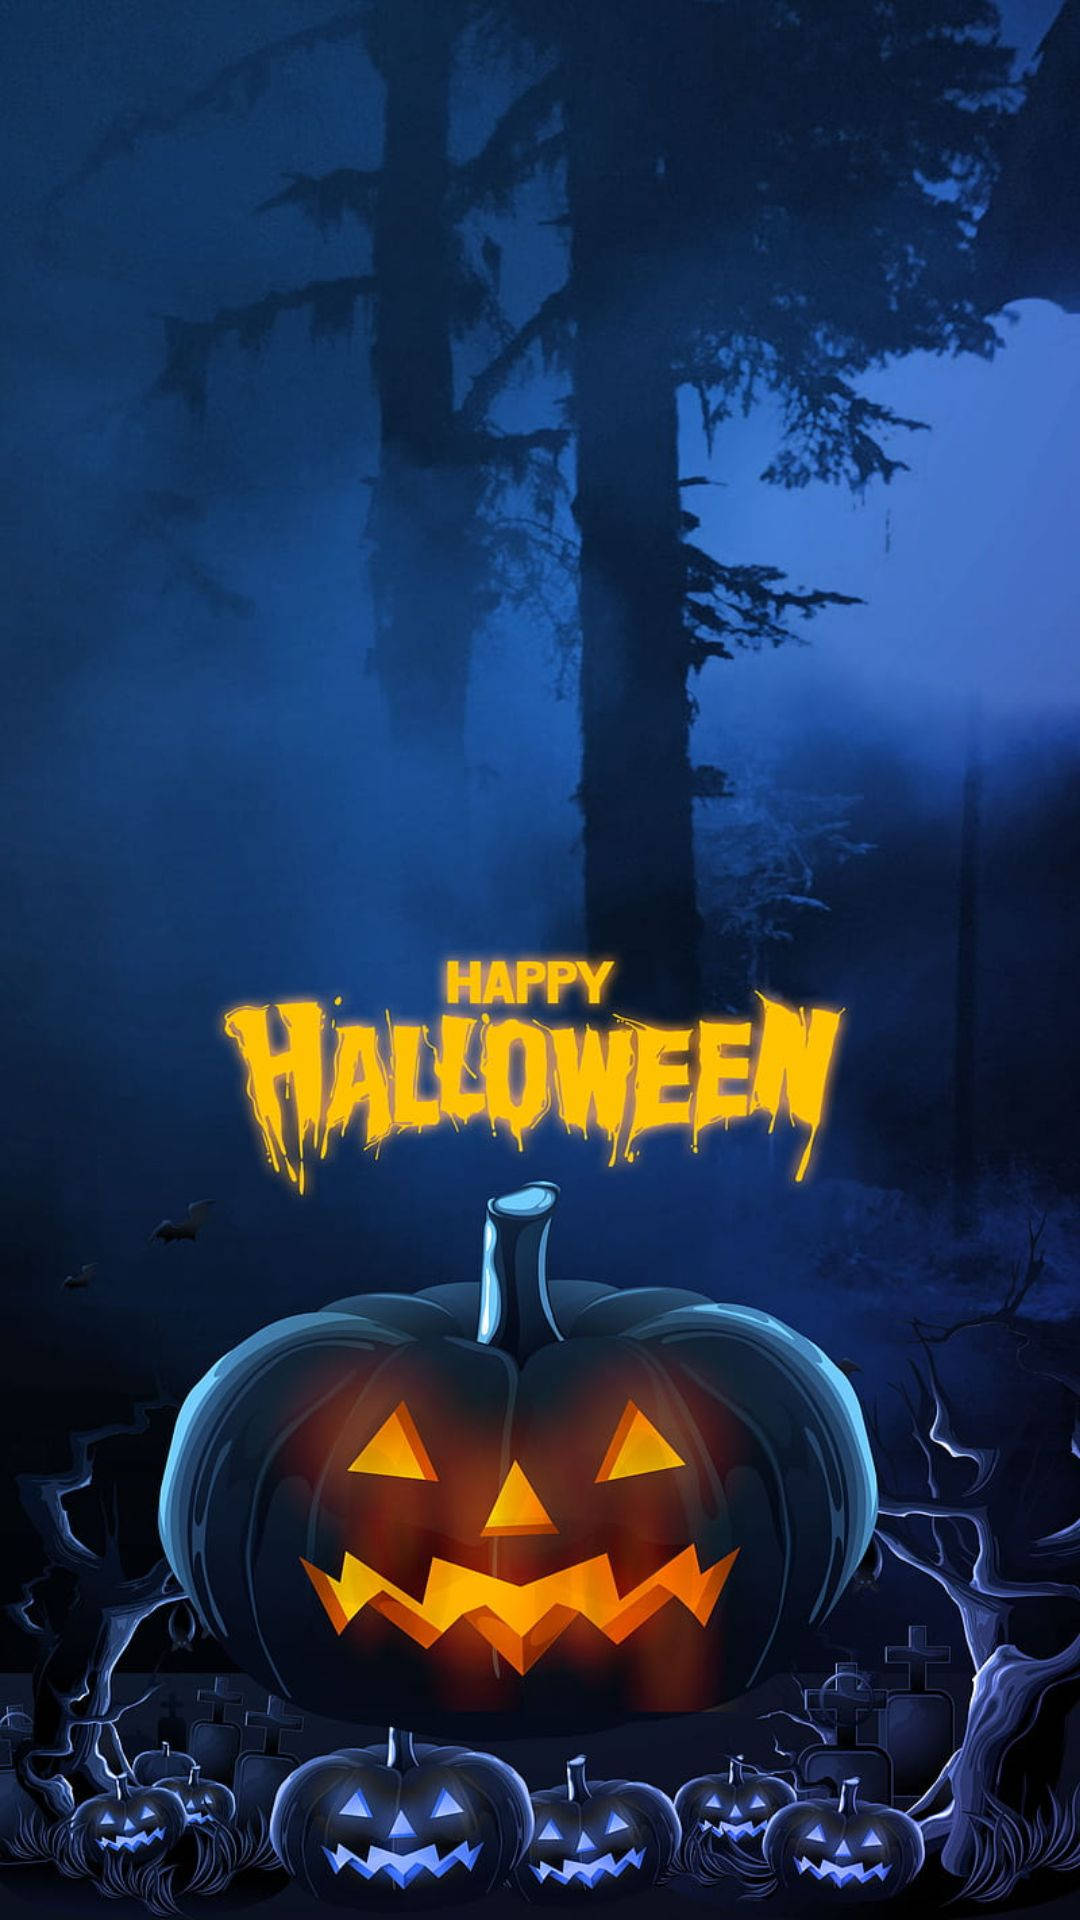 Have A Spooktacular Halloween!